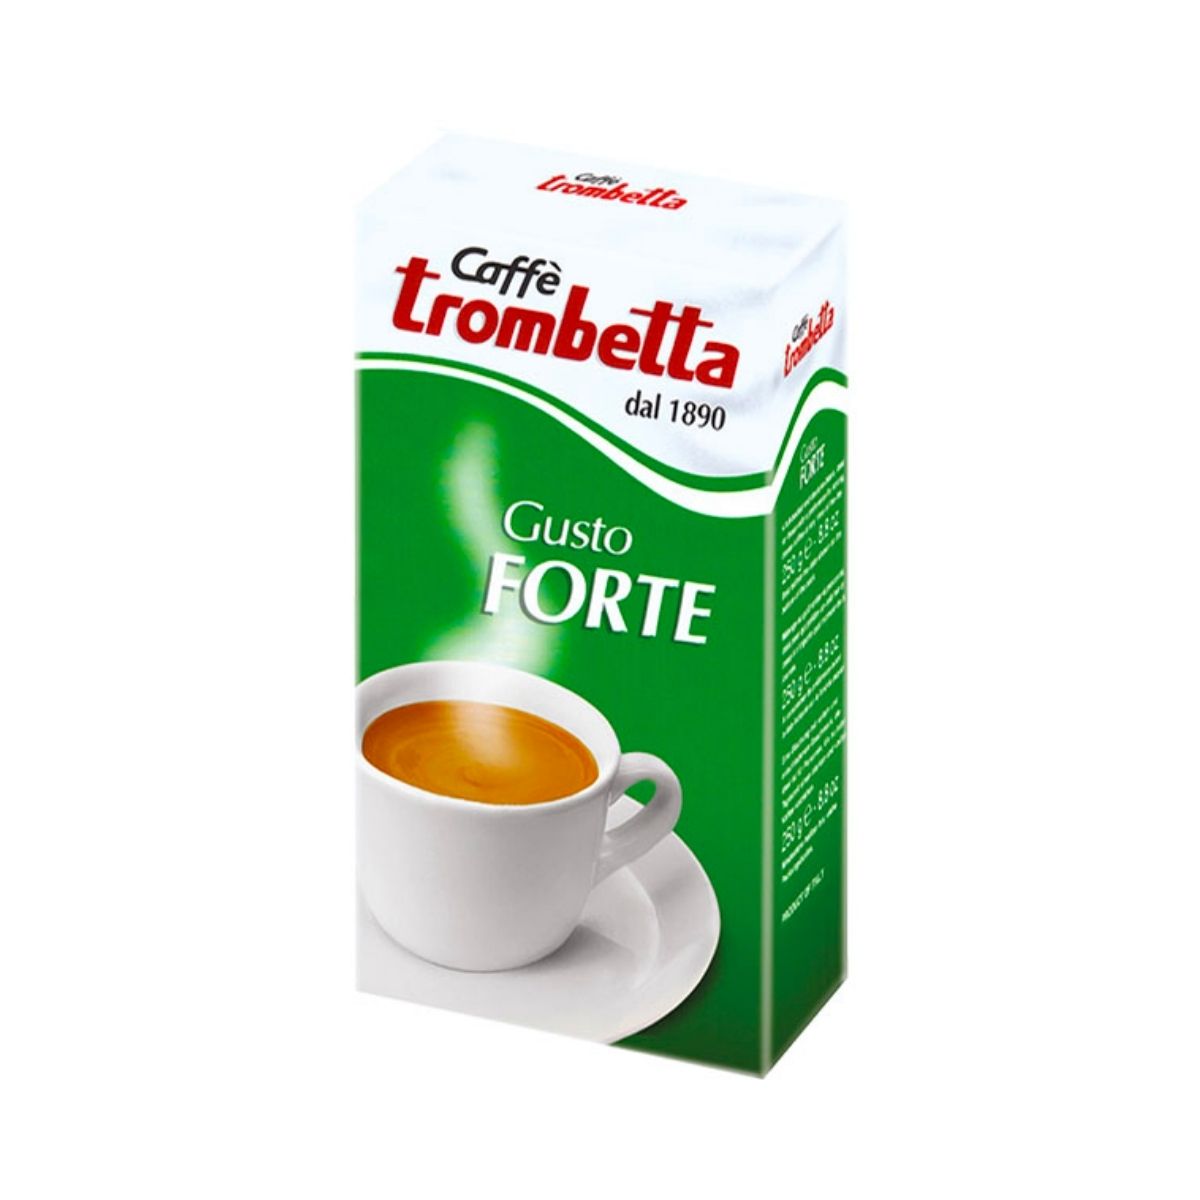 CAFFETROMBETTA - CASA (1)